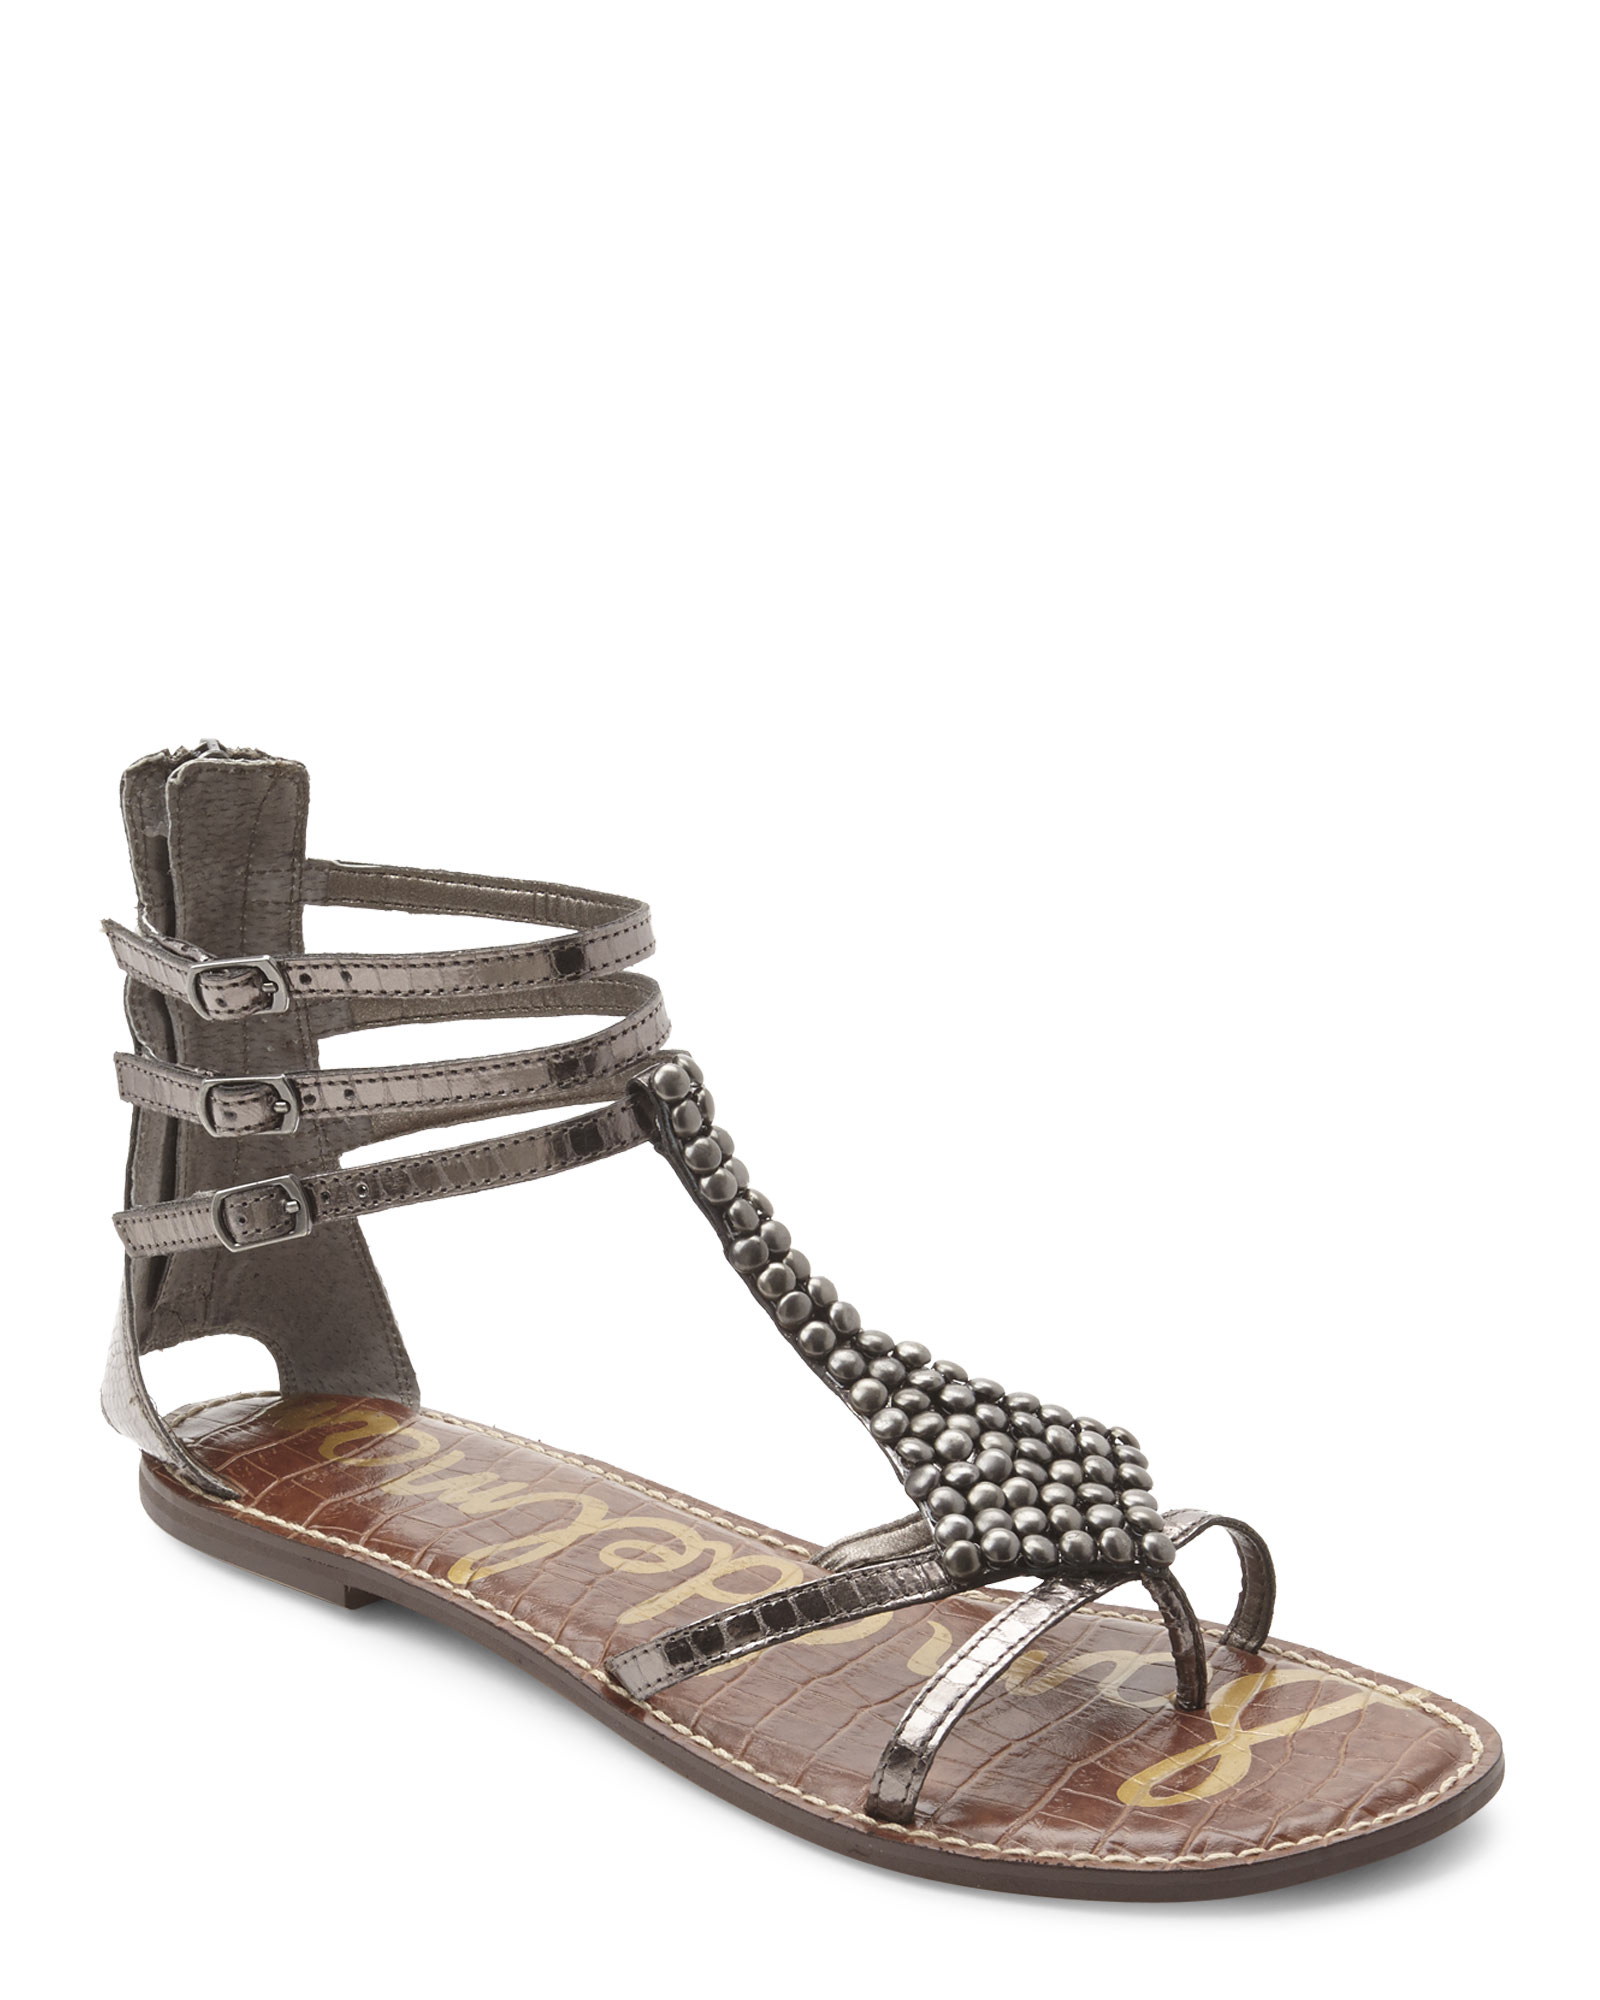 Lyst - Sam Edelman Pewter Ginger Embellished Gladiator Sandals in Metallic